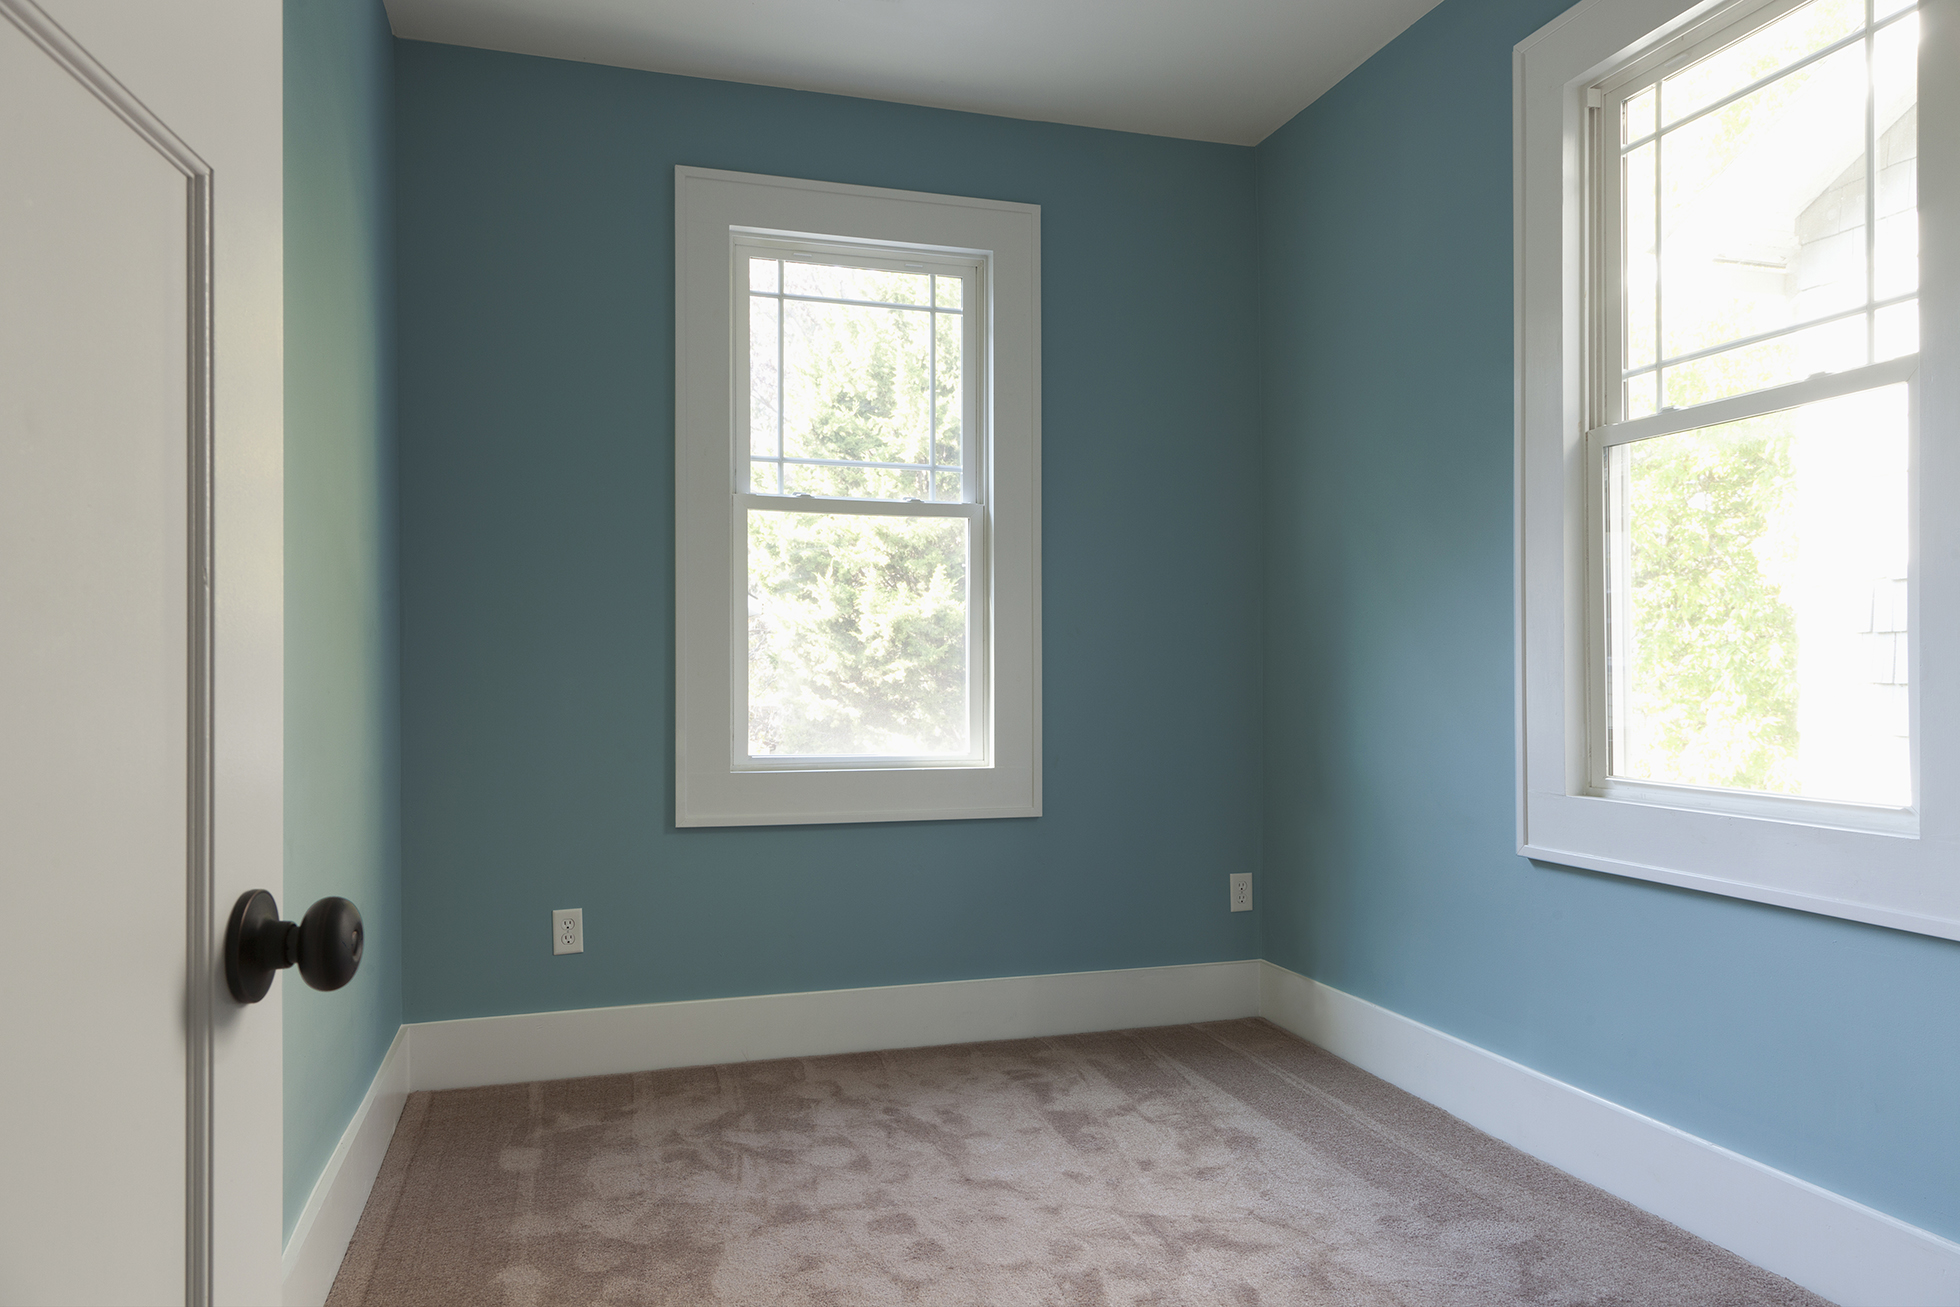 White door opening to empty blue room with beige carpet